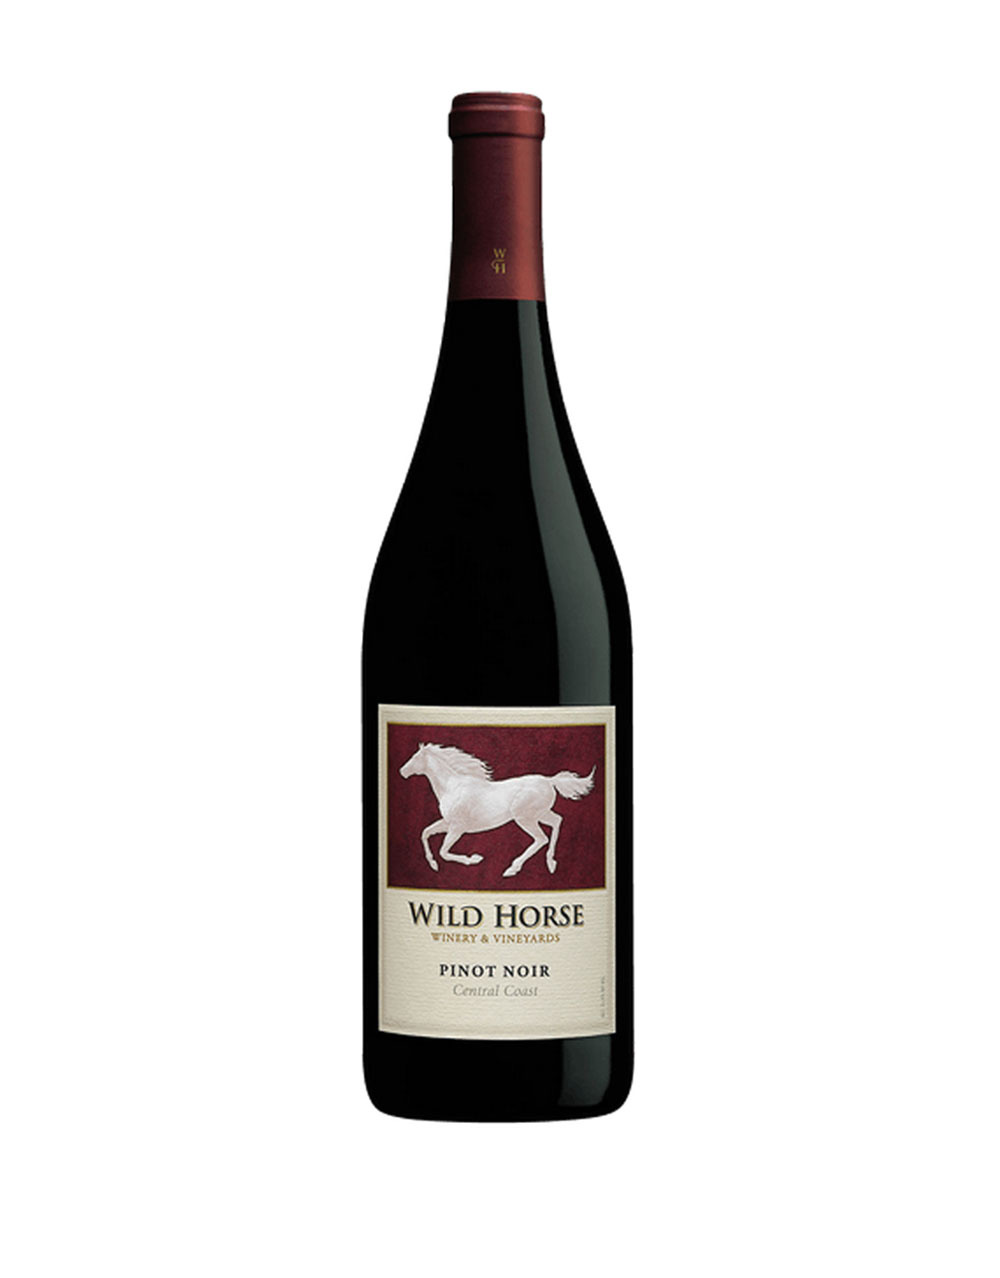 Wild Horse Pinot Noir 2015 Central Coast